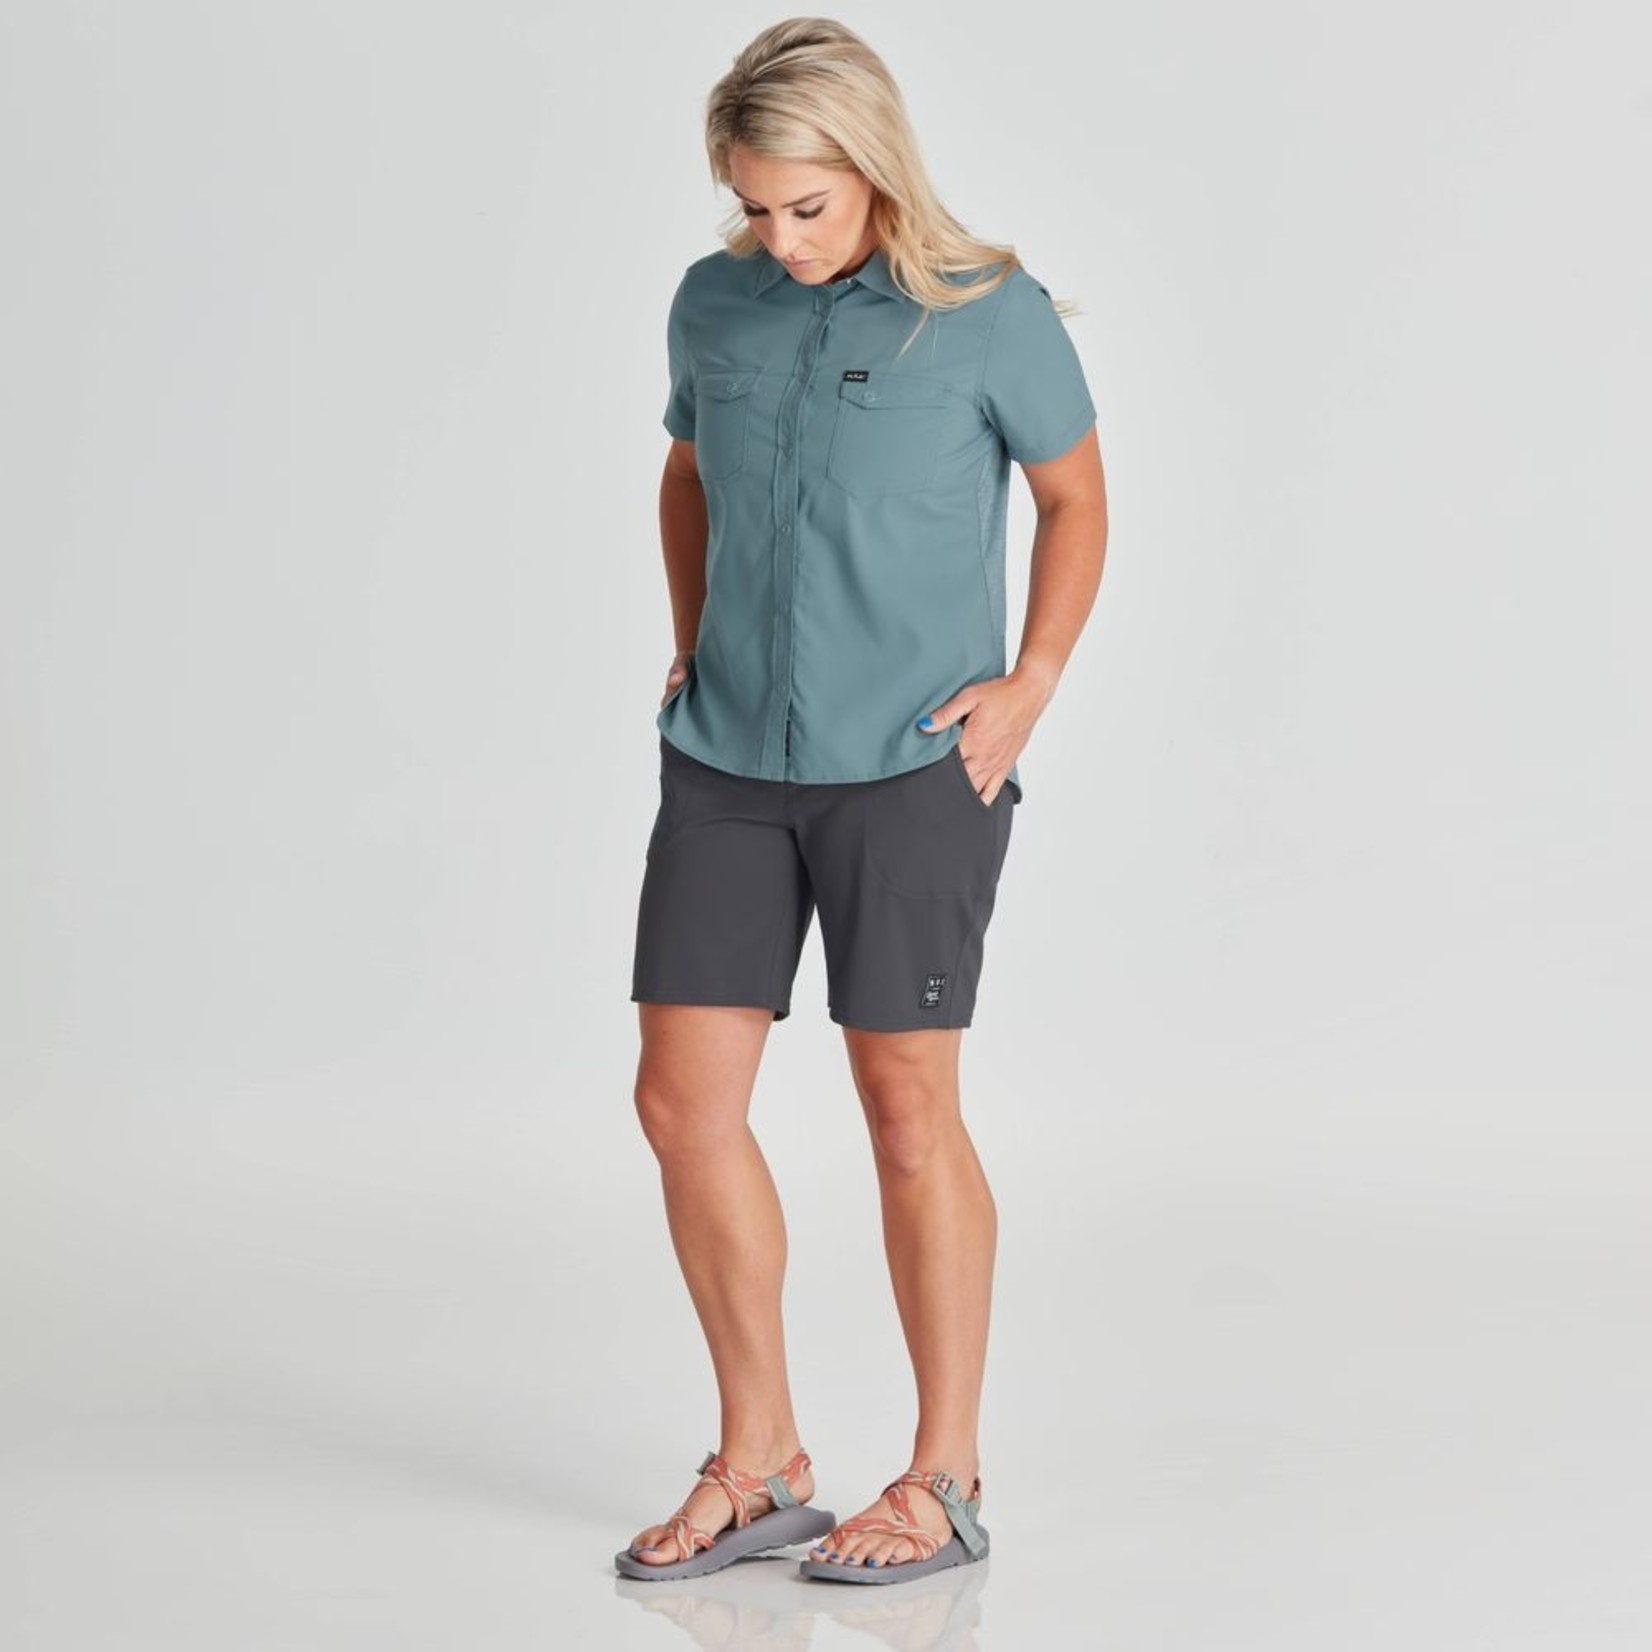 NRS, Inc NRS Women's Short-Sleeve Guide Shirt **Closeout**